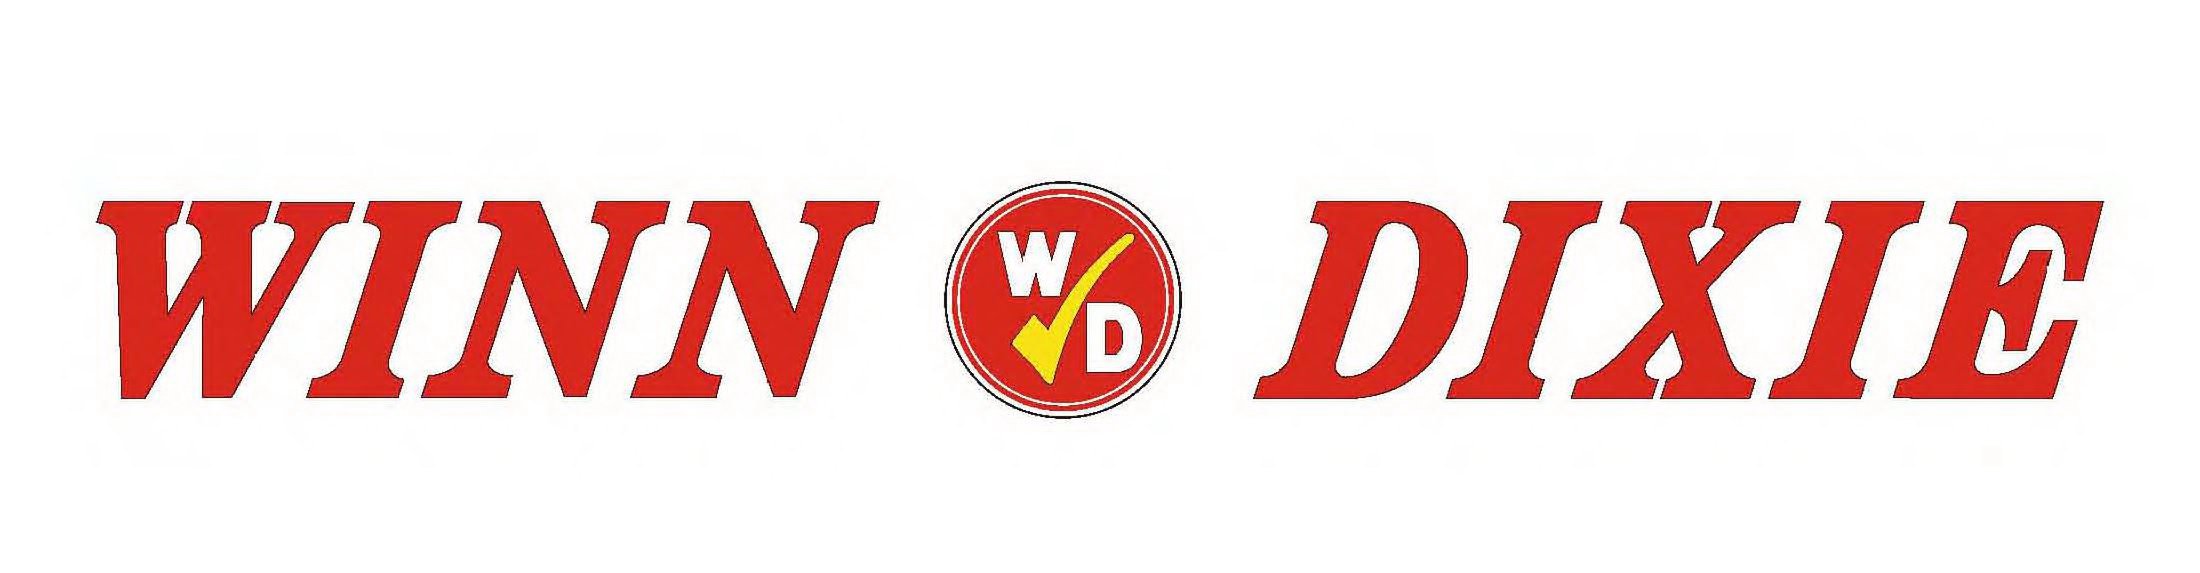 Trademark Logo WINN W D DIXIE